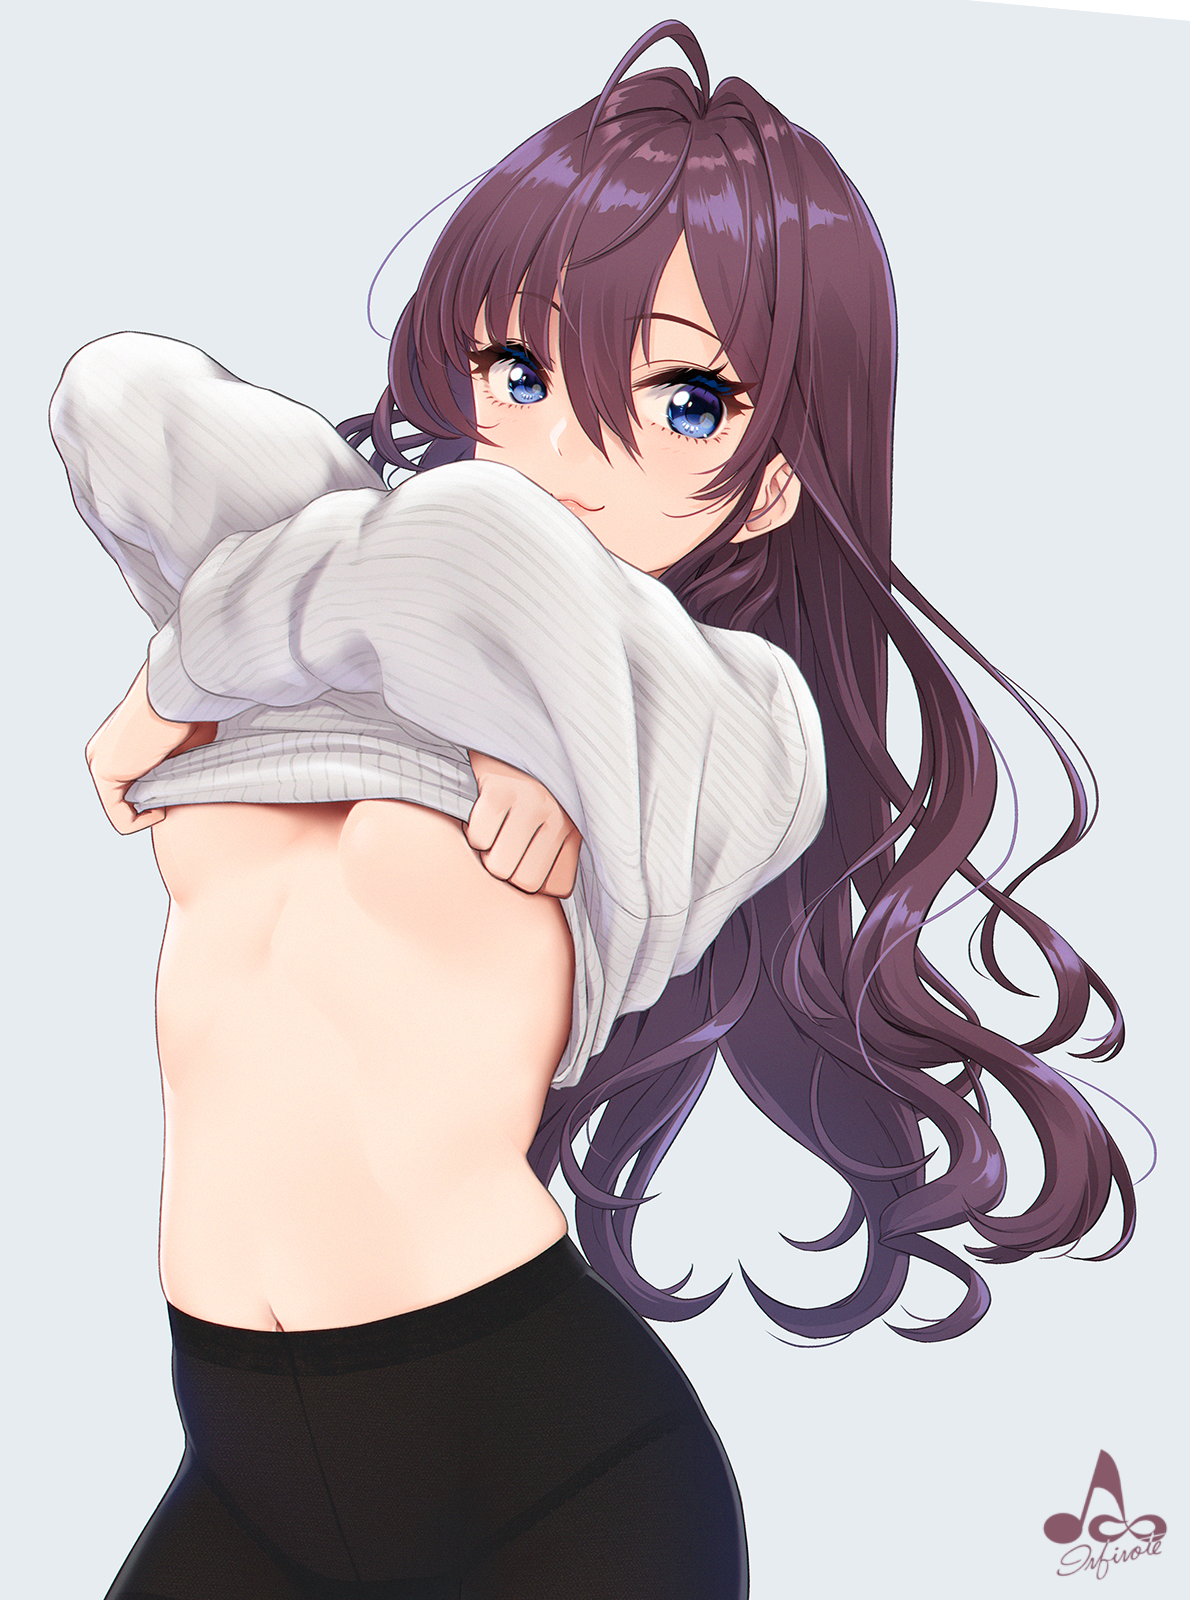 Anime 1190x1600 anime anime girls digital art artwork 2D portrait display THE iDOLM@STER Ichinose Shiki sweater no bra undressing pantyhose infinote small boobs ecchi underboob